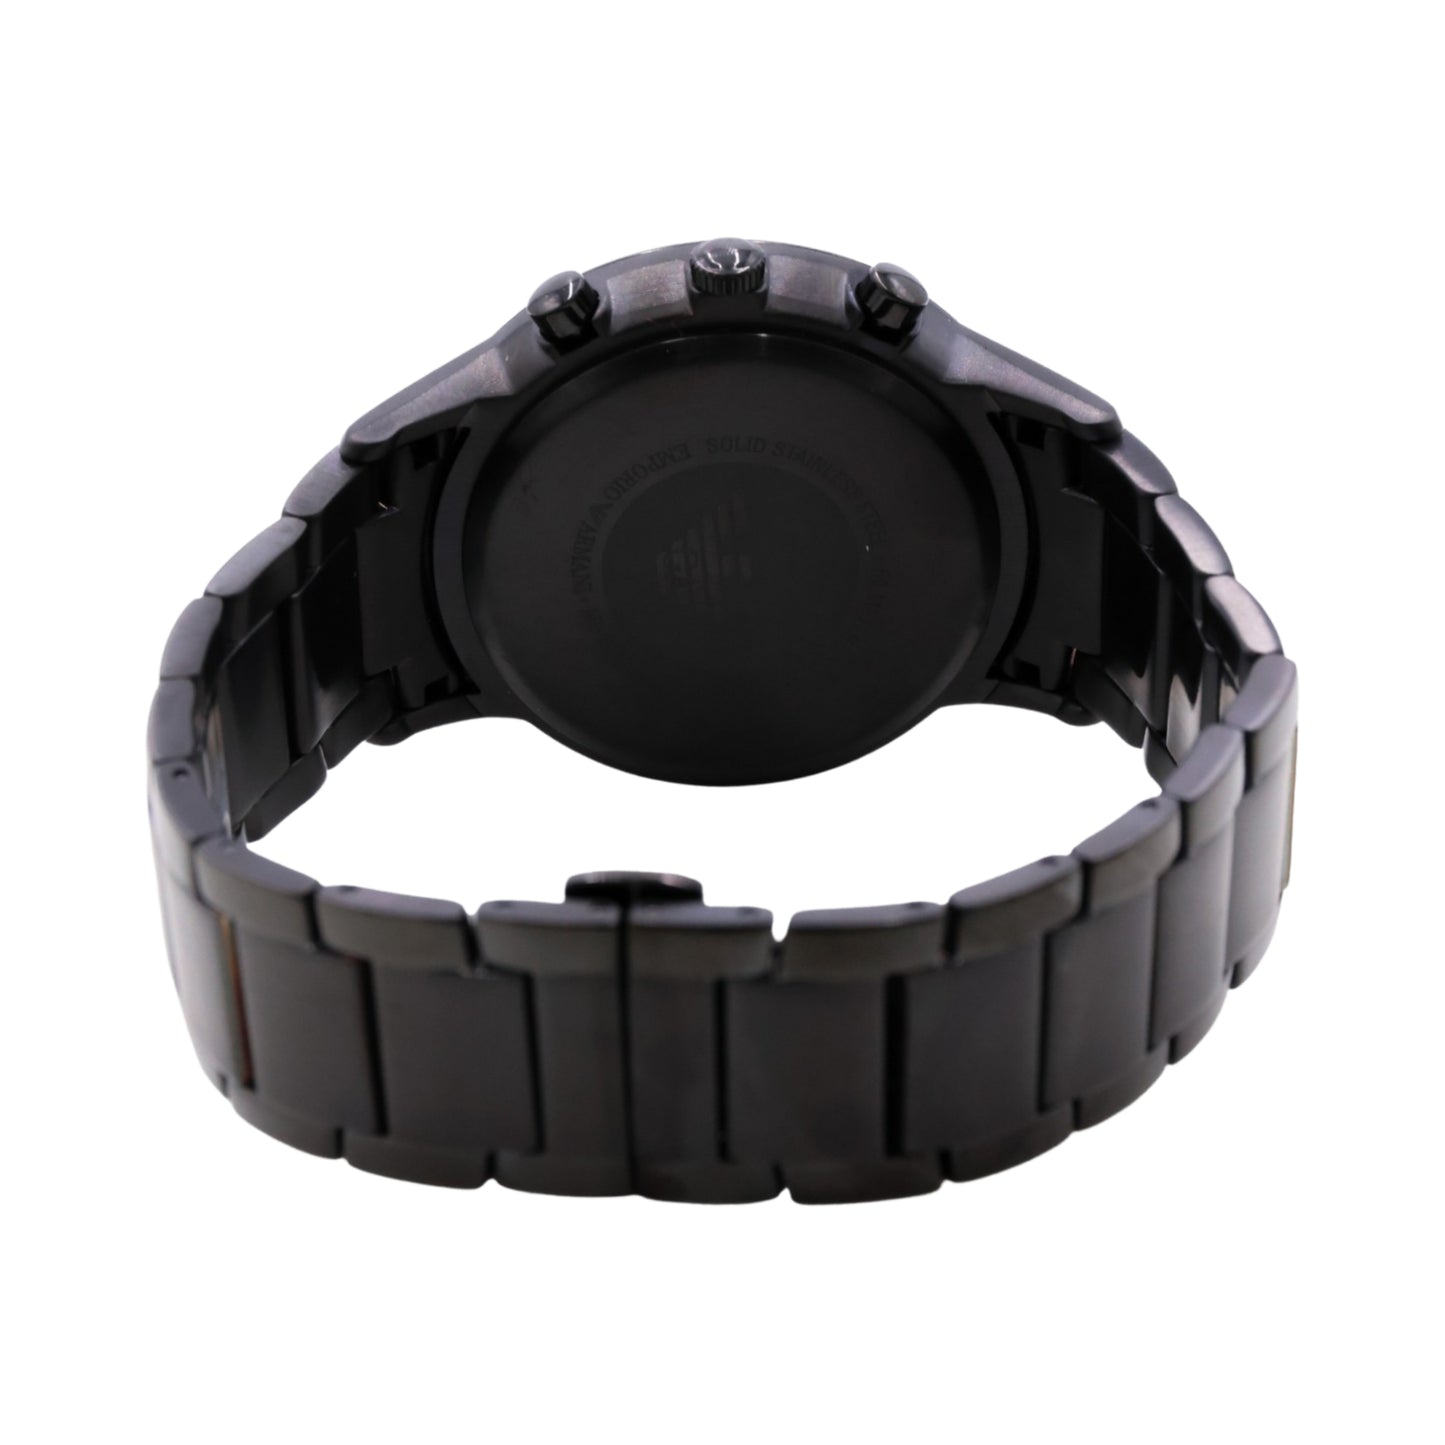 Emporio Armani Men's Black Dress Watch with Quartz Movement - AR2485